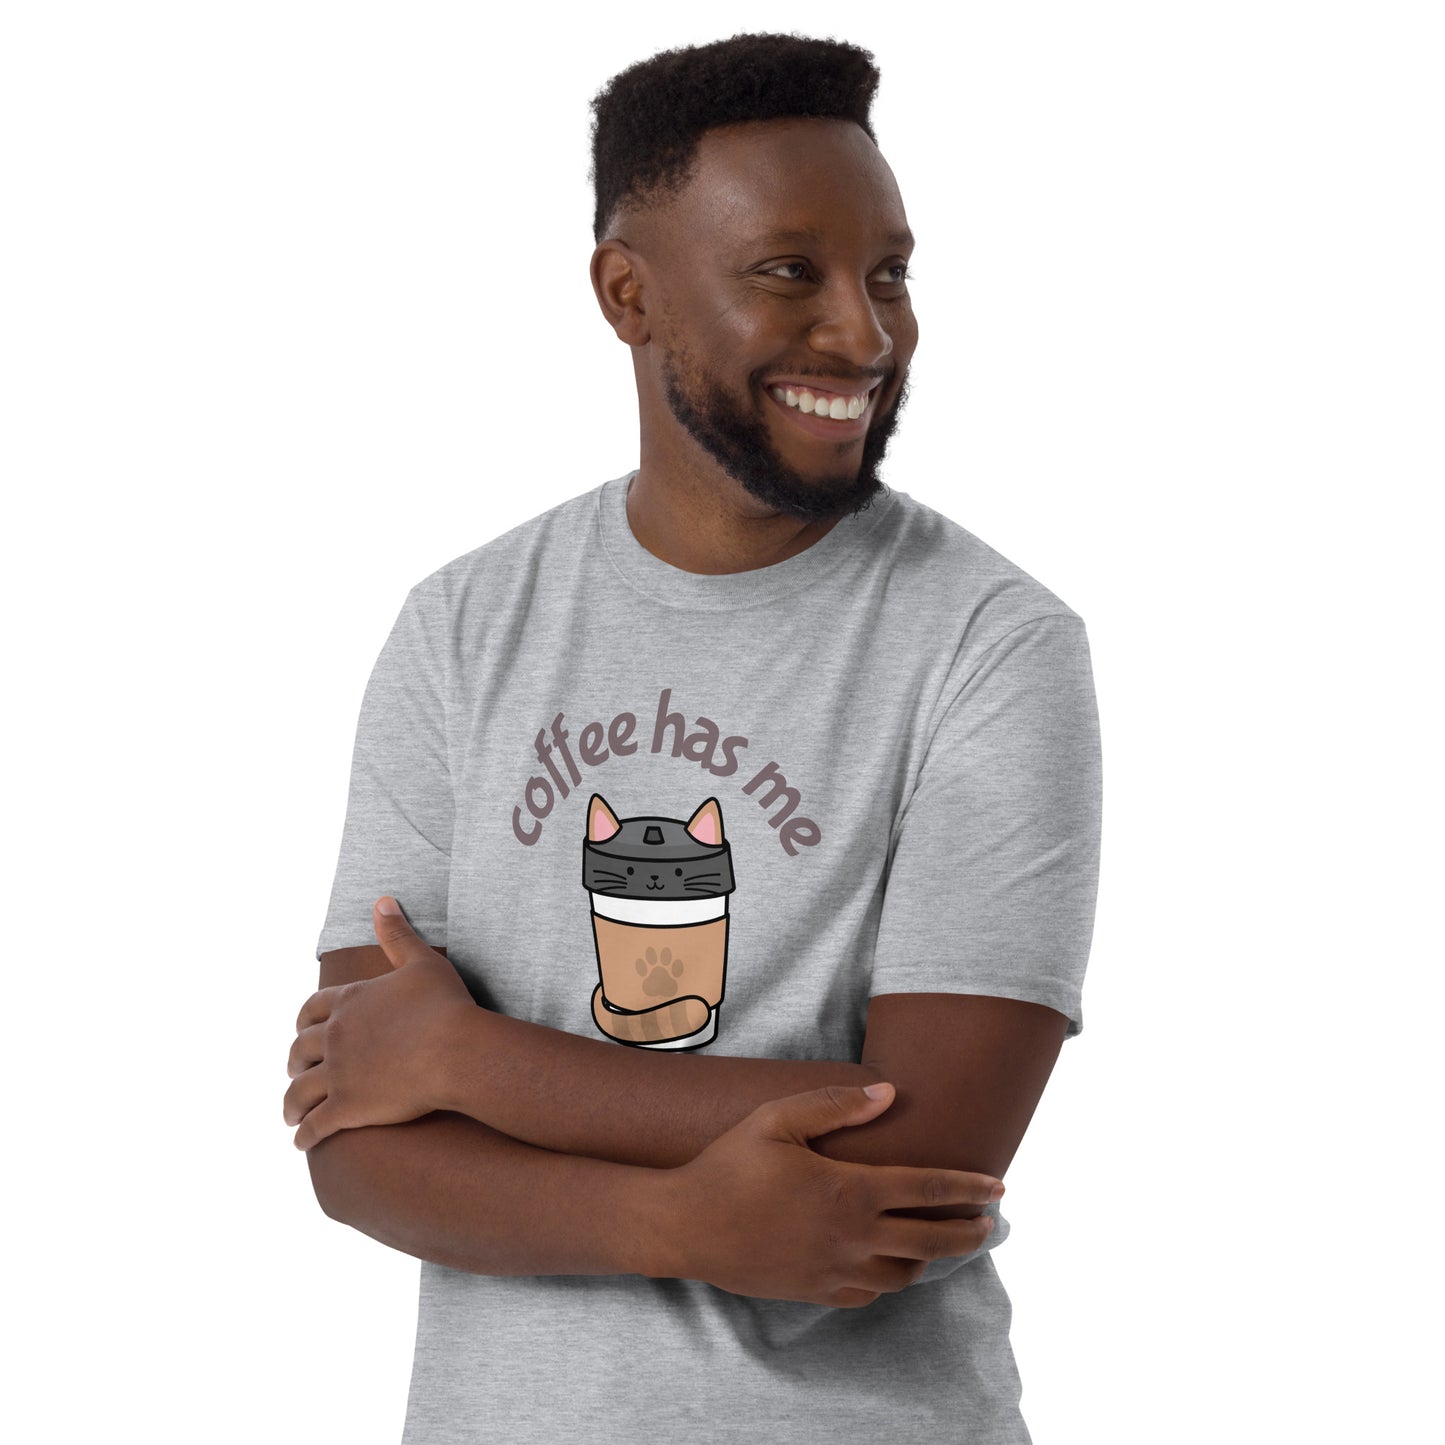 Coffee Has Me Feline Good - Short-Sleeve Unisex T-Shirt Unisex T-shirt Animal Coffee